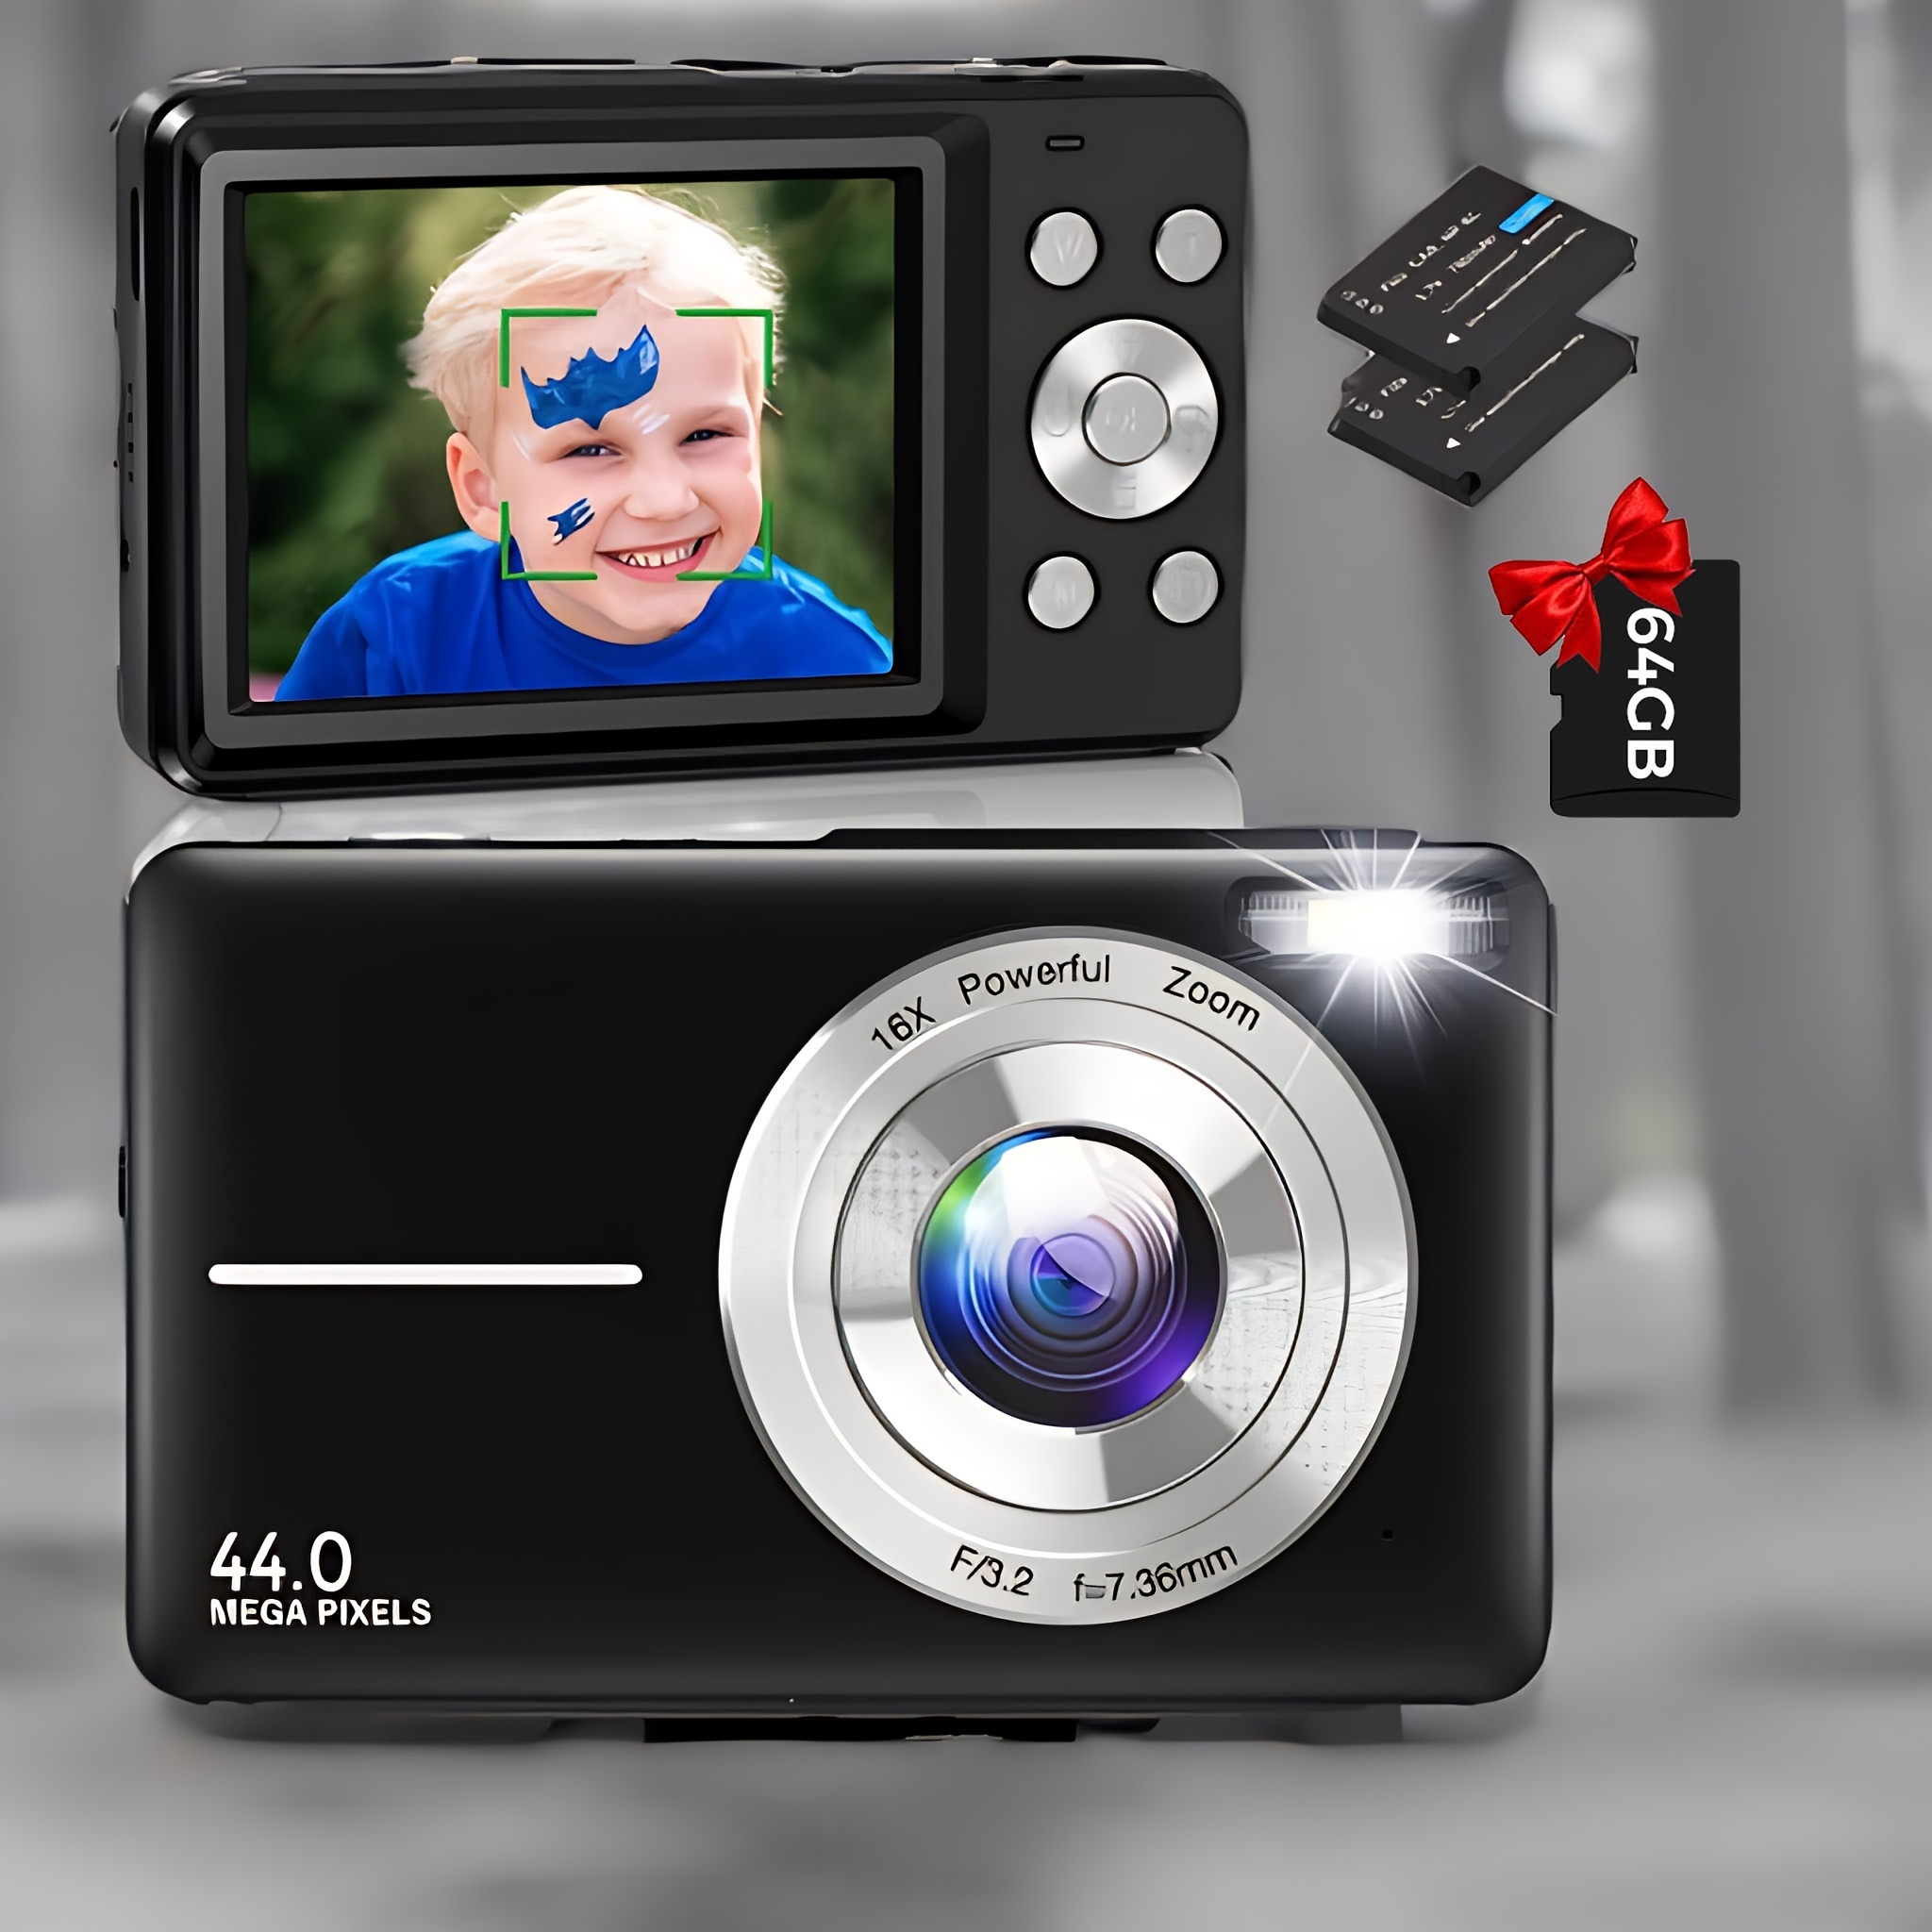 Cámara infantil, cámara digital infantil FHD 1080p, zoom digital 16x con  tarjeta SD de 32 gb, cámara compacta de toma de puntos, pequeña cámara